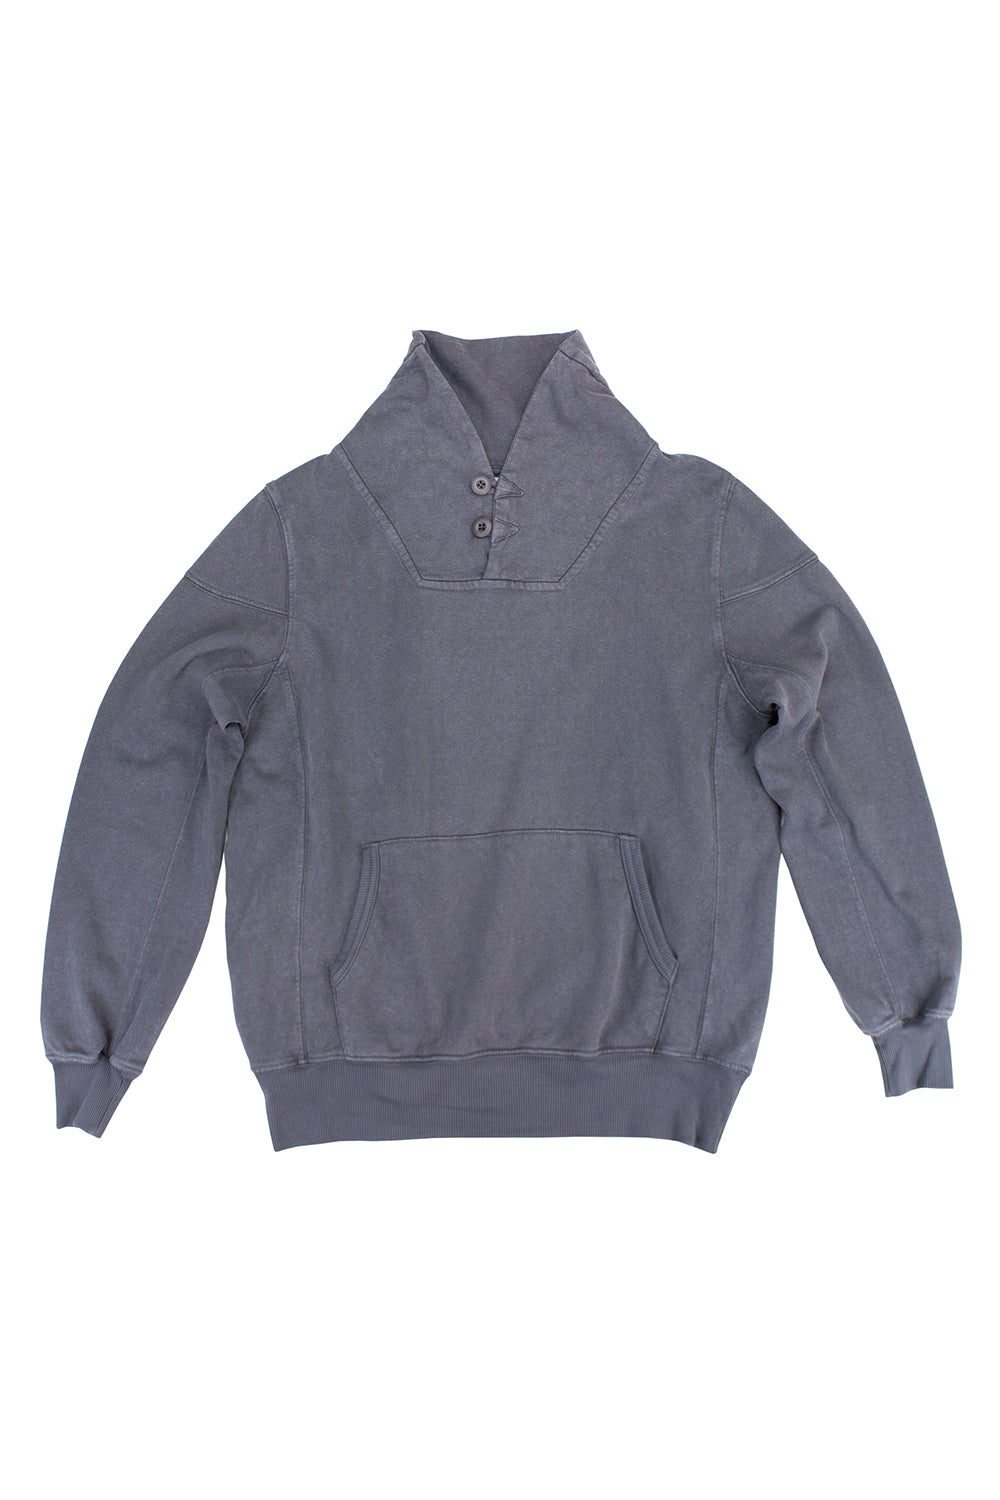 Whittier Sweatshirt | Jungmaven Hemp Clothing & Accessories / Color: Diesel Gray